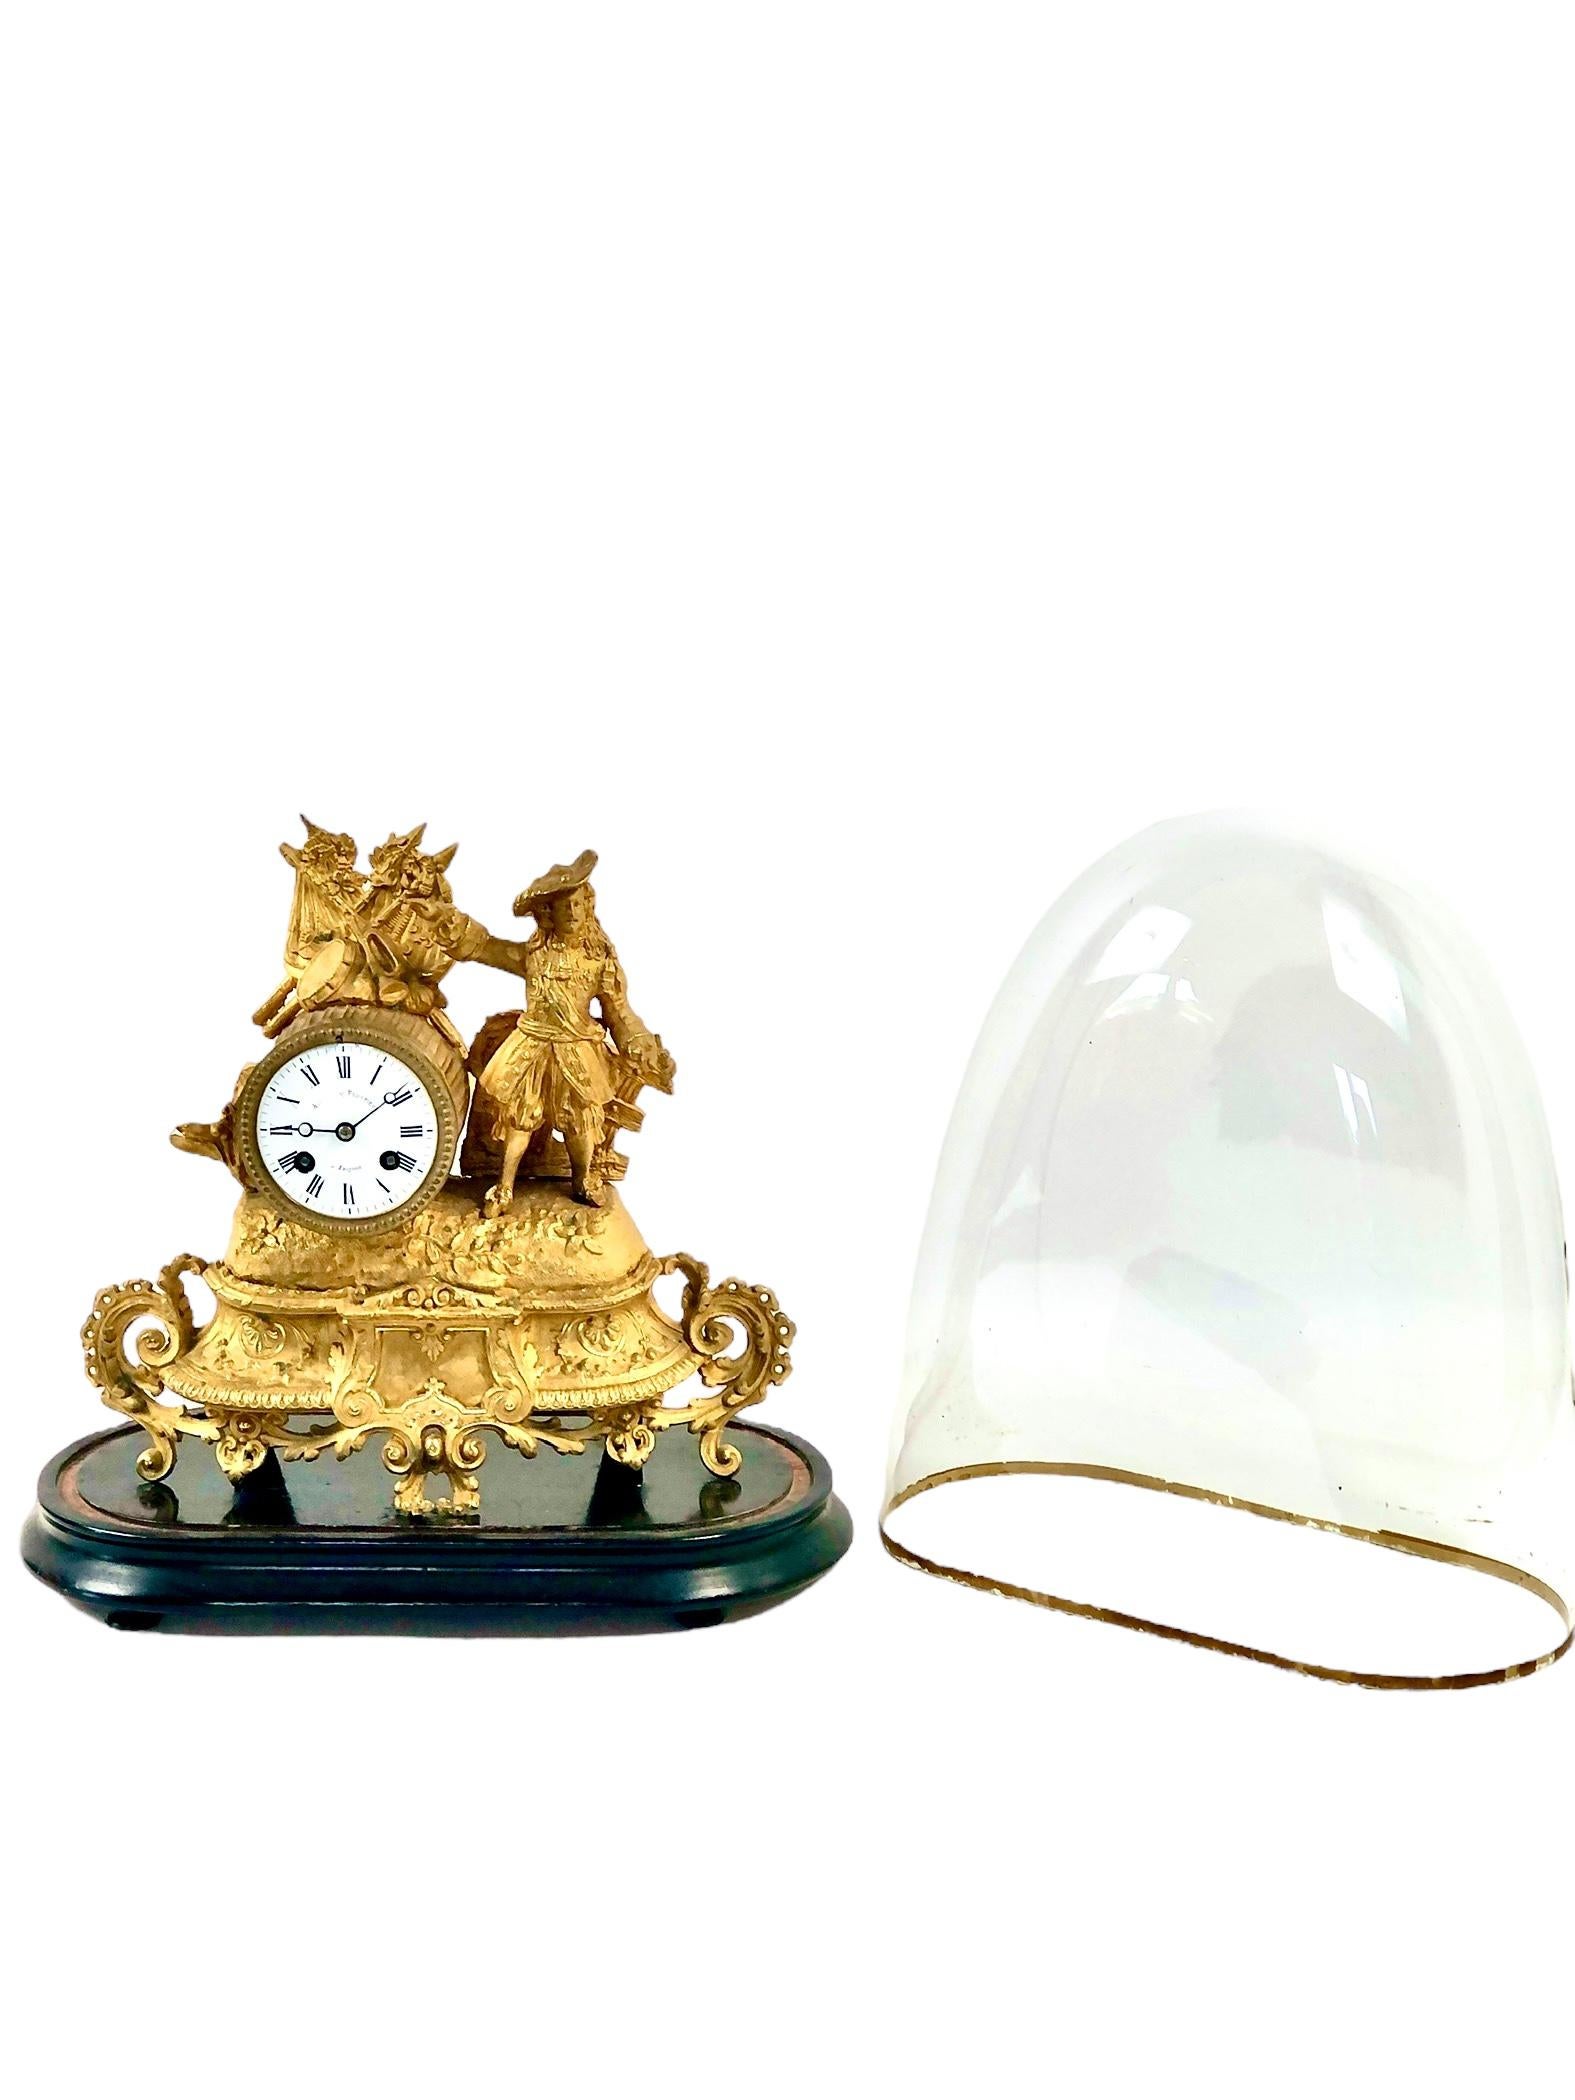 Napoleon III 19th century French Gilt Mantel Clock under Glass Dome